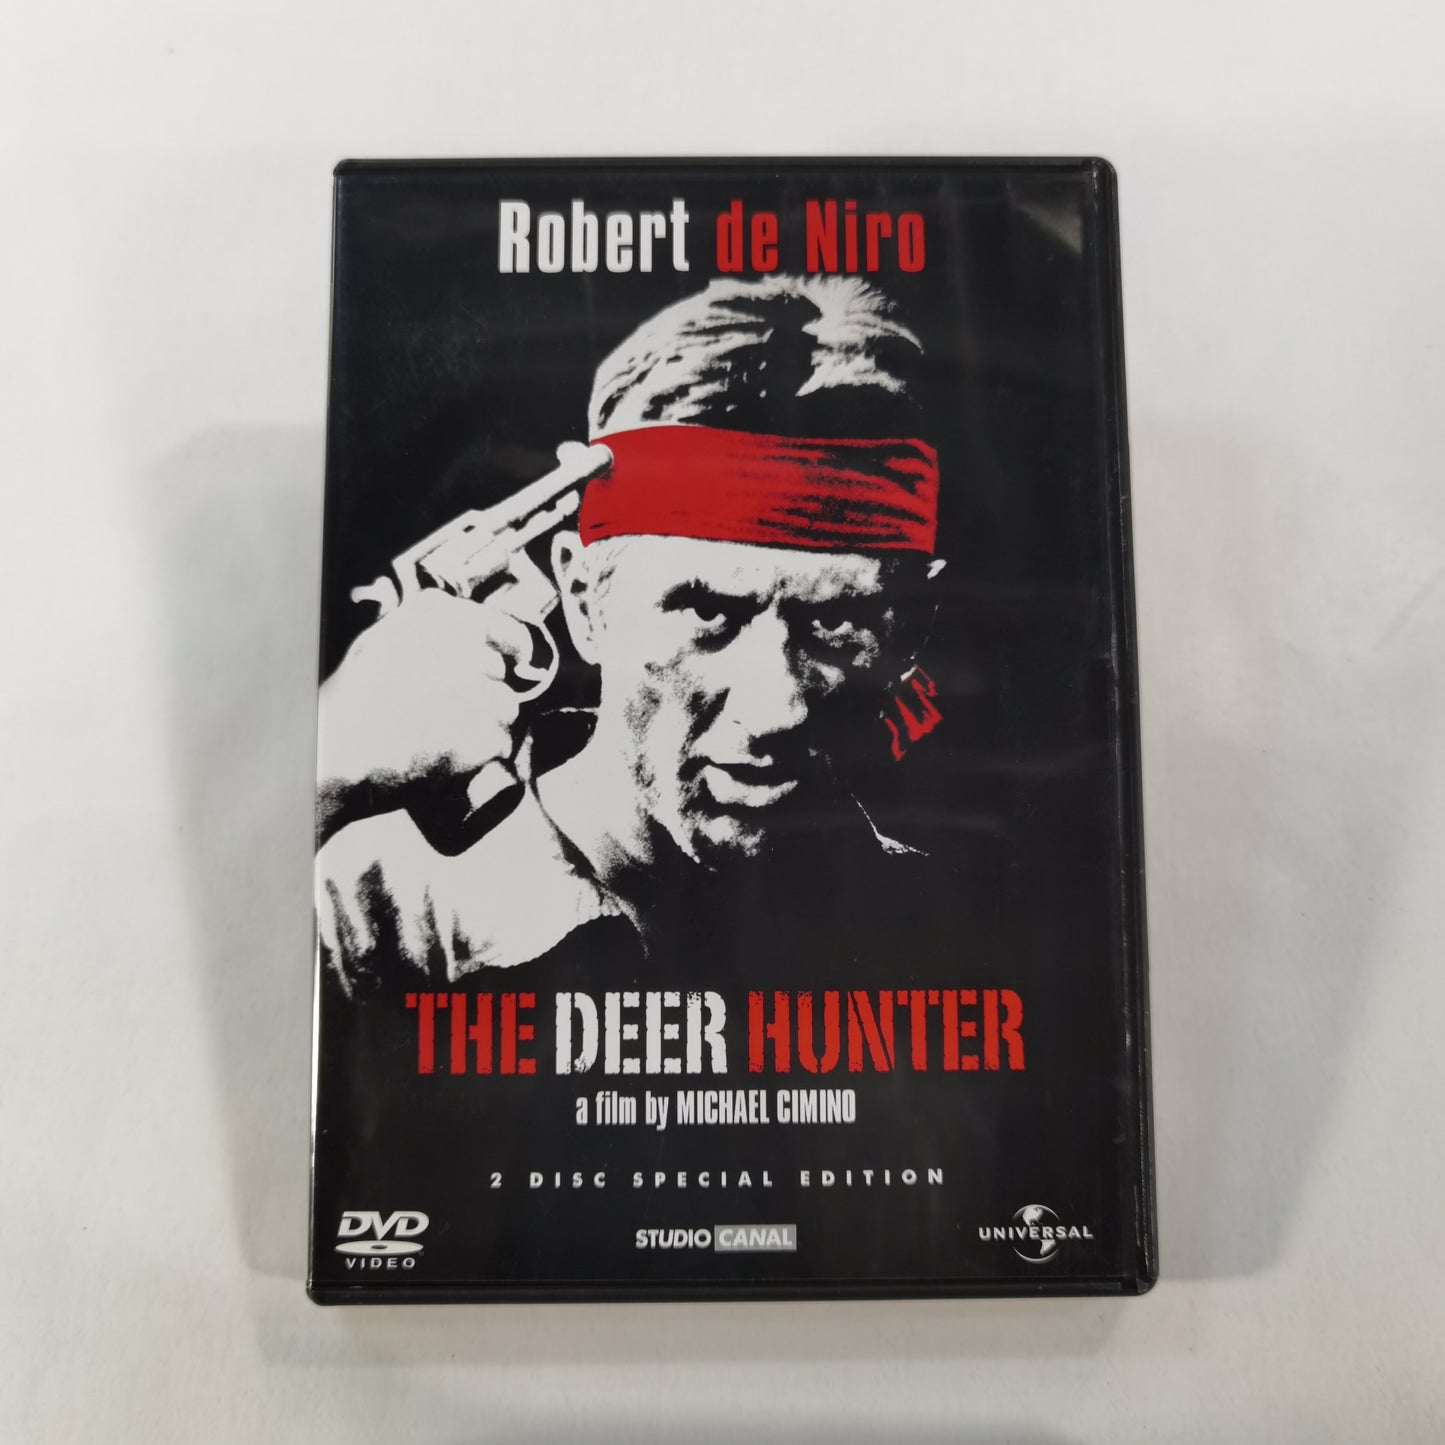 The Deer Hunter (1978) - DVD SE NO DK FI 2007 2-Disc Special Edition